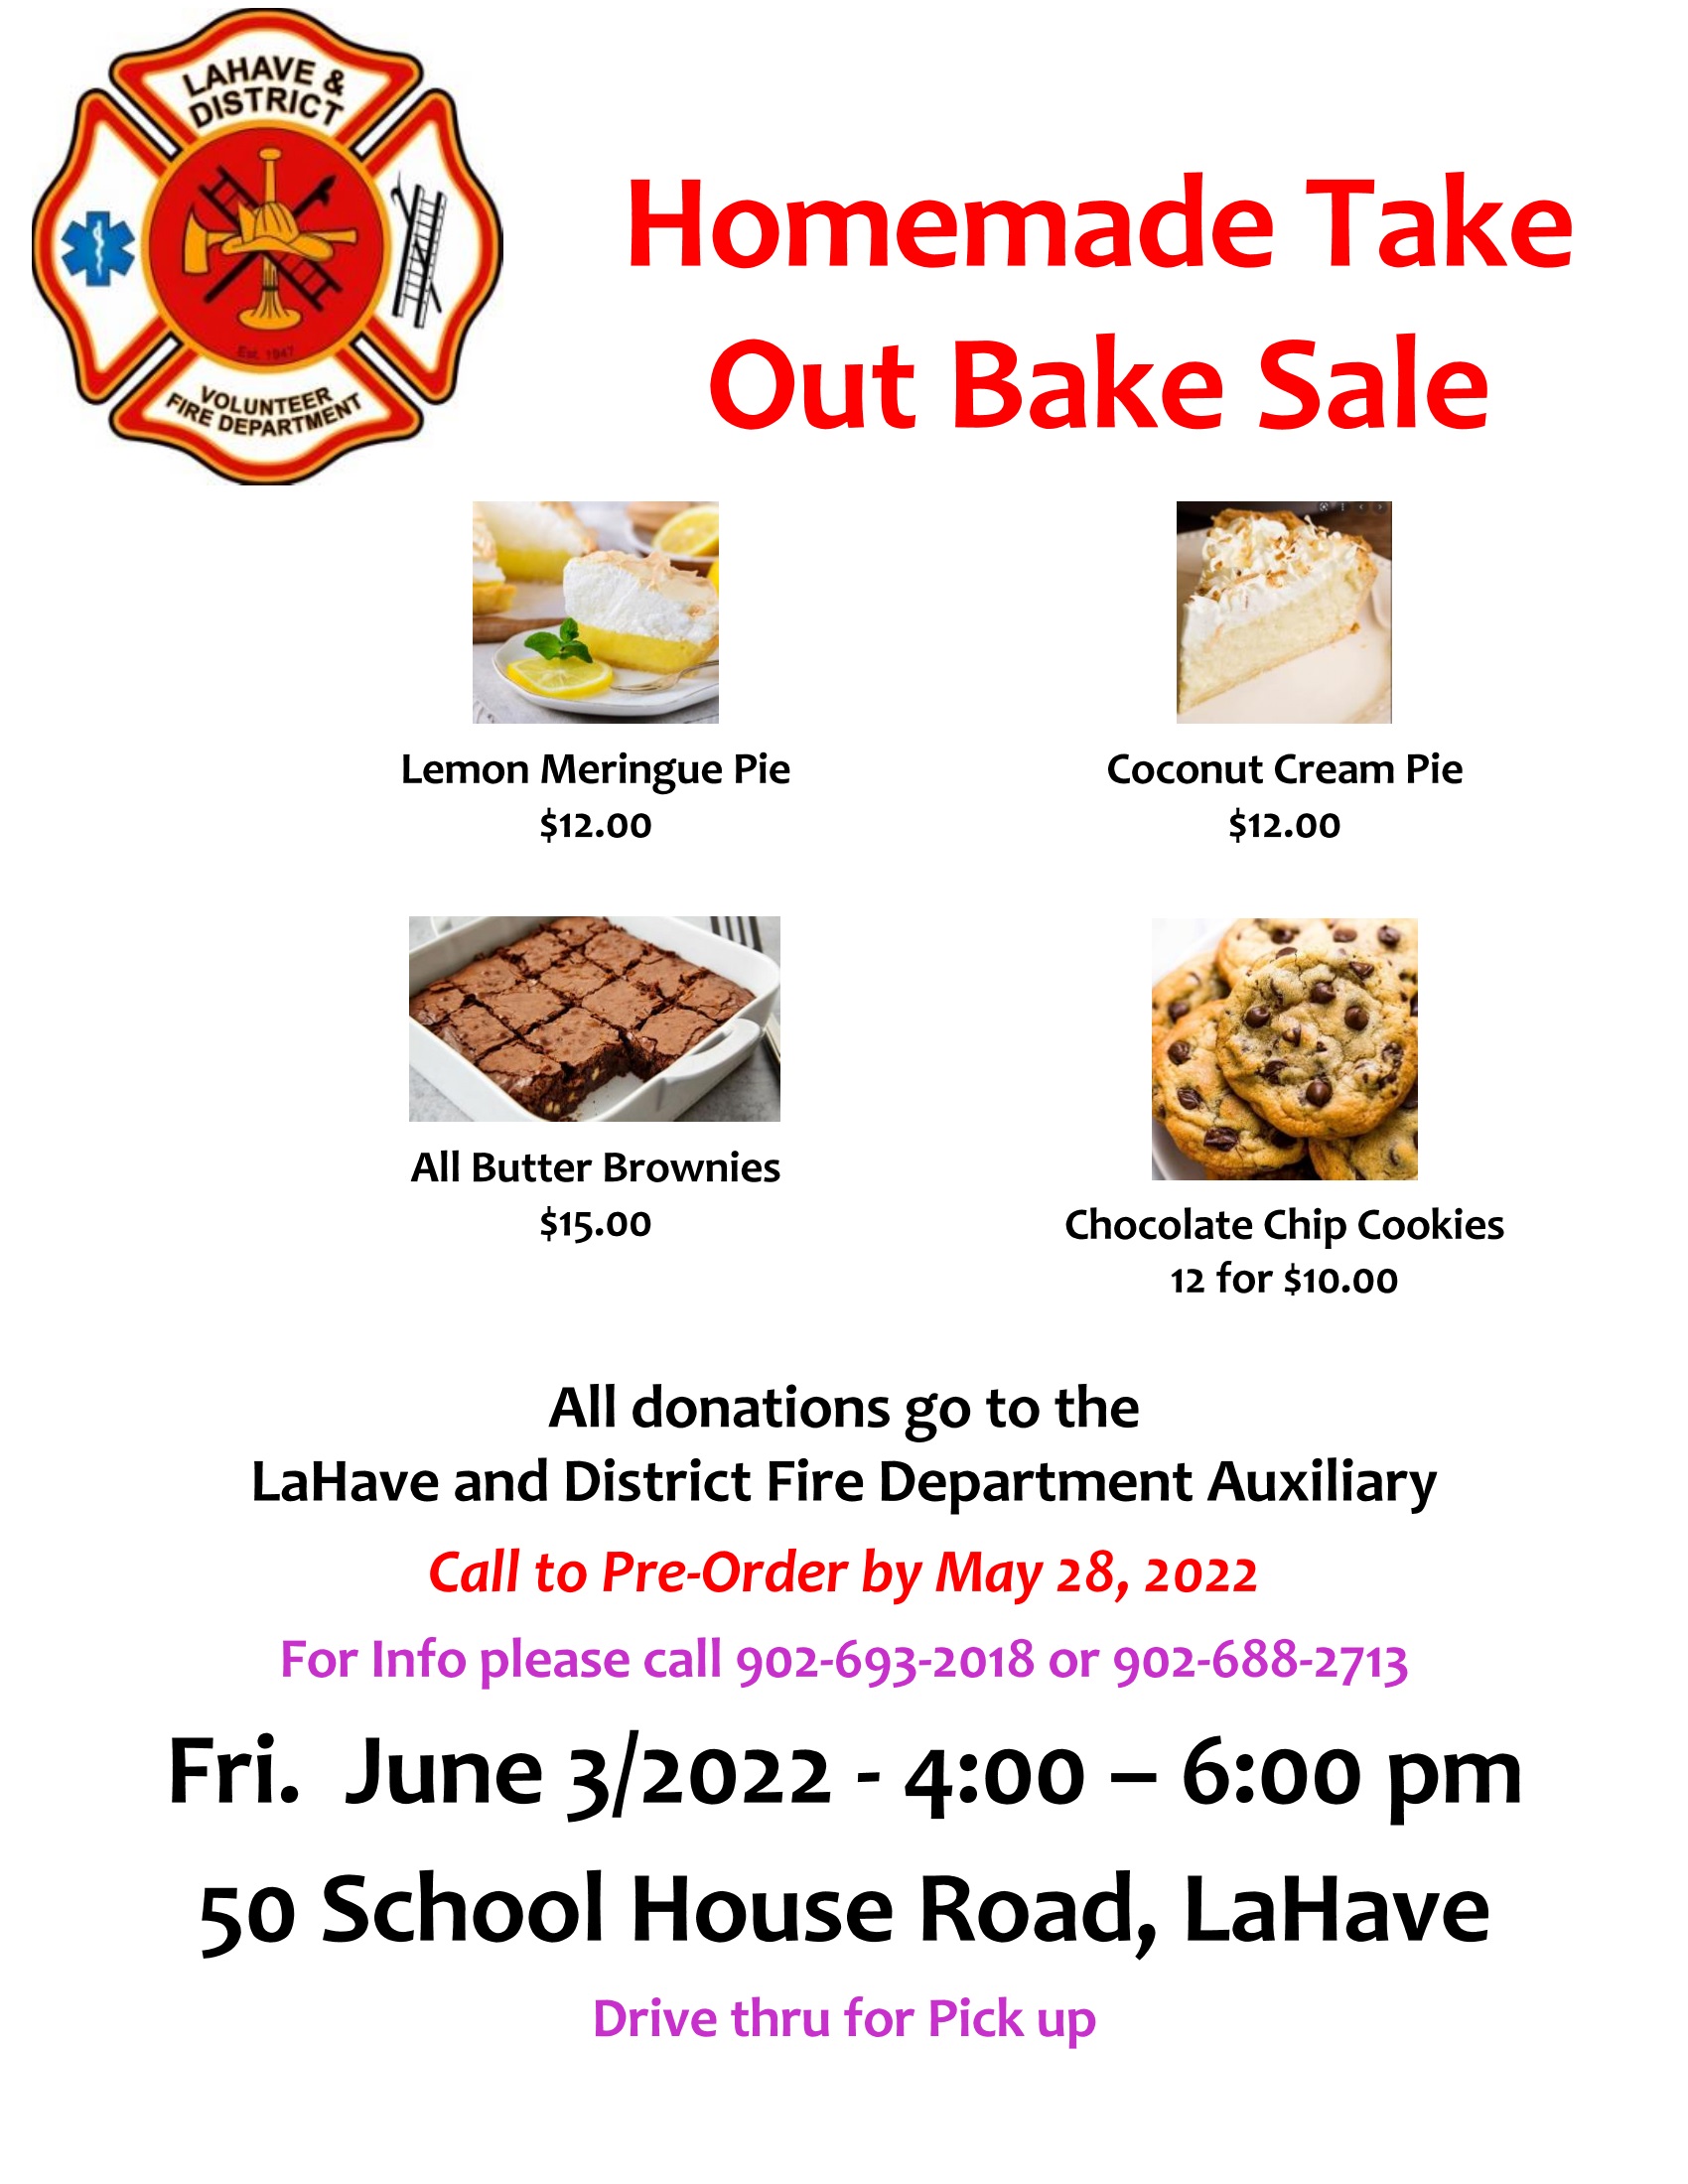 Take Out Bake Sale June 3 2022